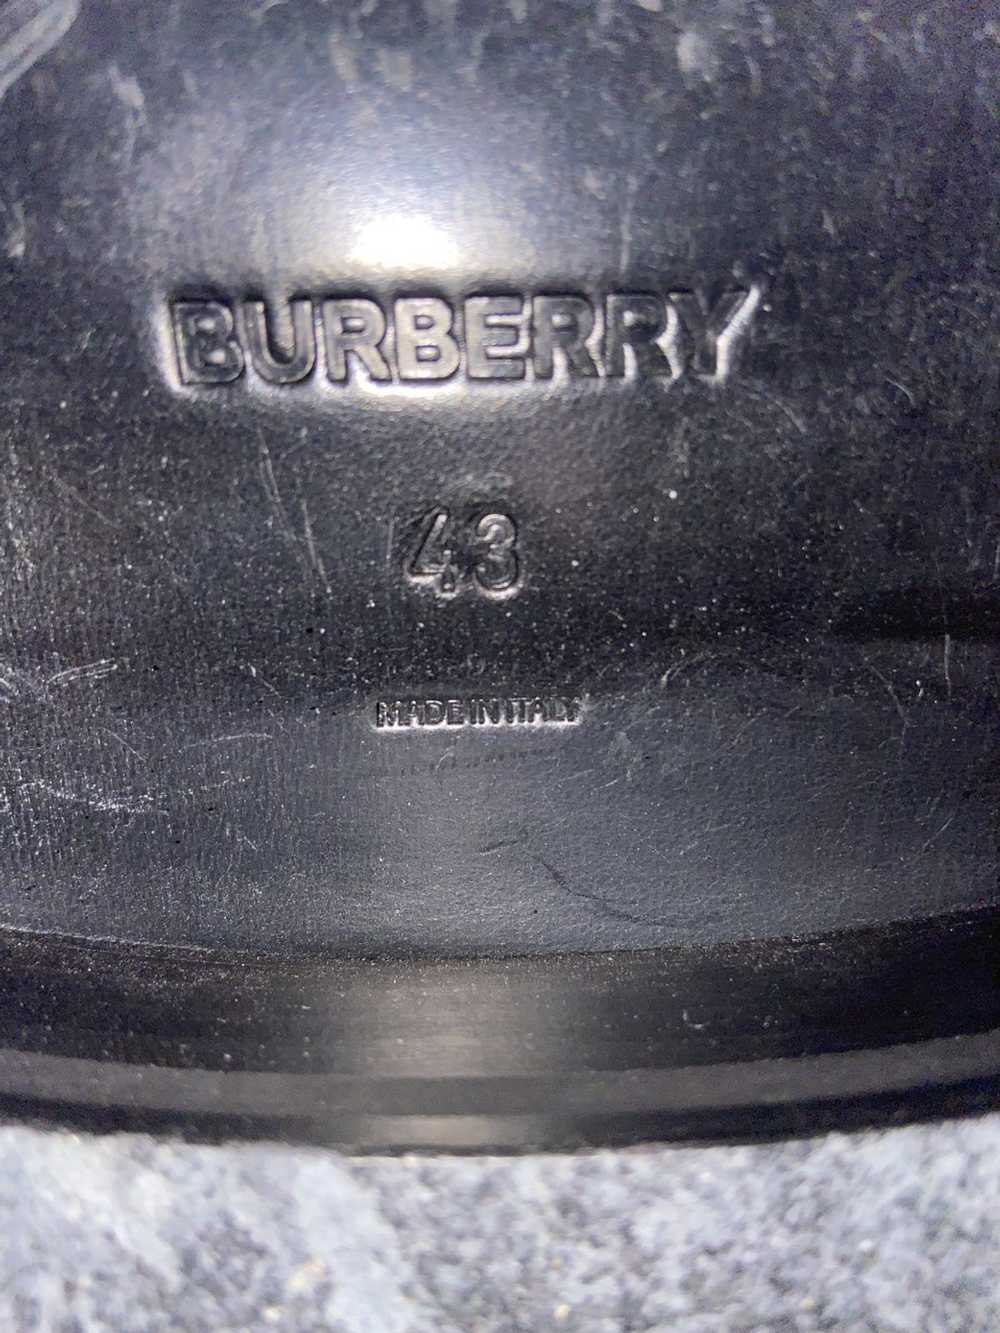 Burberry Burberry 43 - image 6